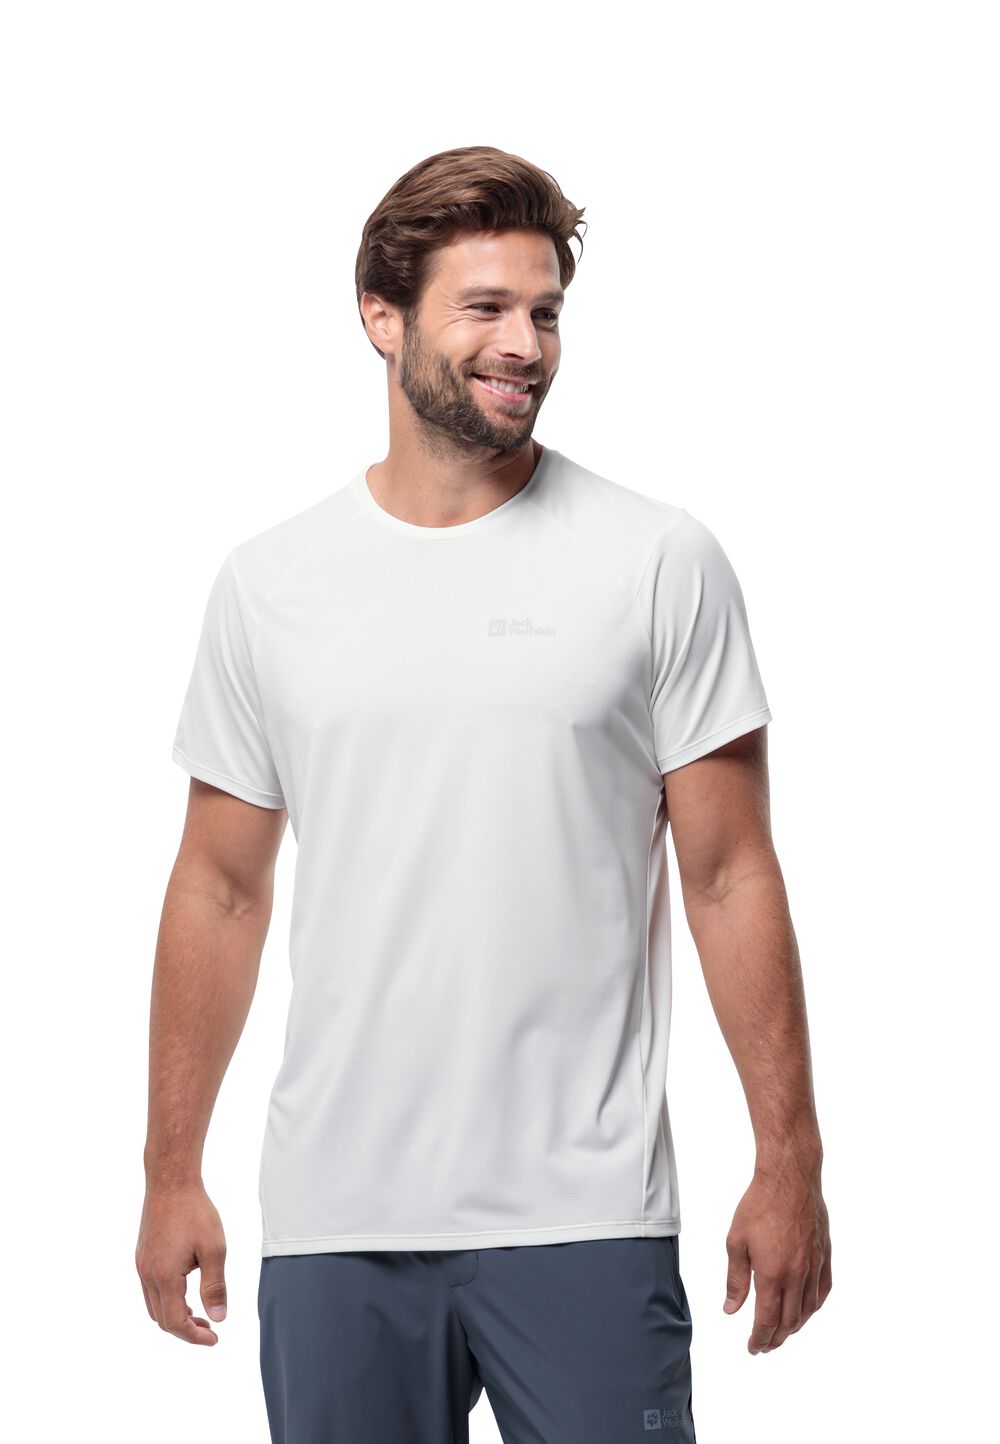 Jack Wolfskin Prelight Trail T-Shirt Men Functioneel shirt Heren XL wit stark white